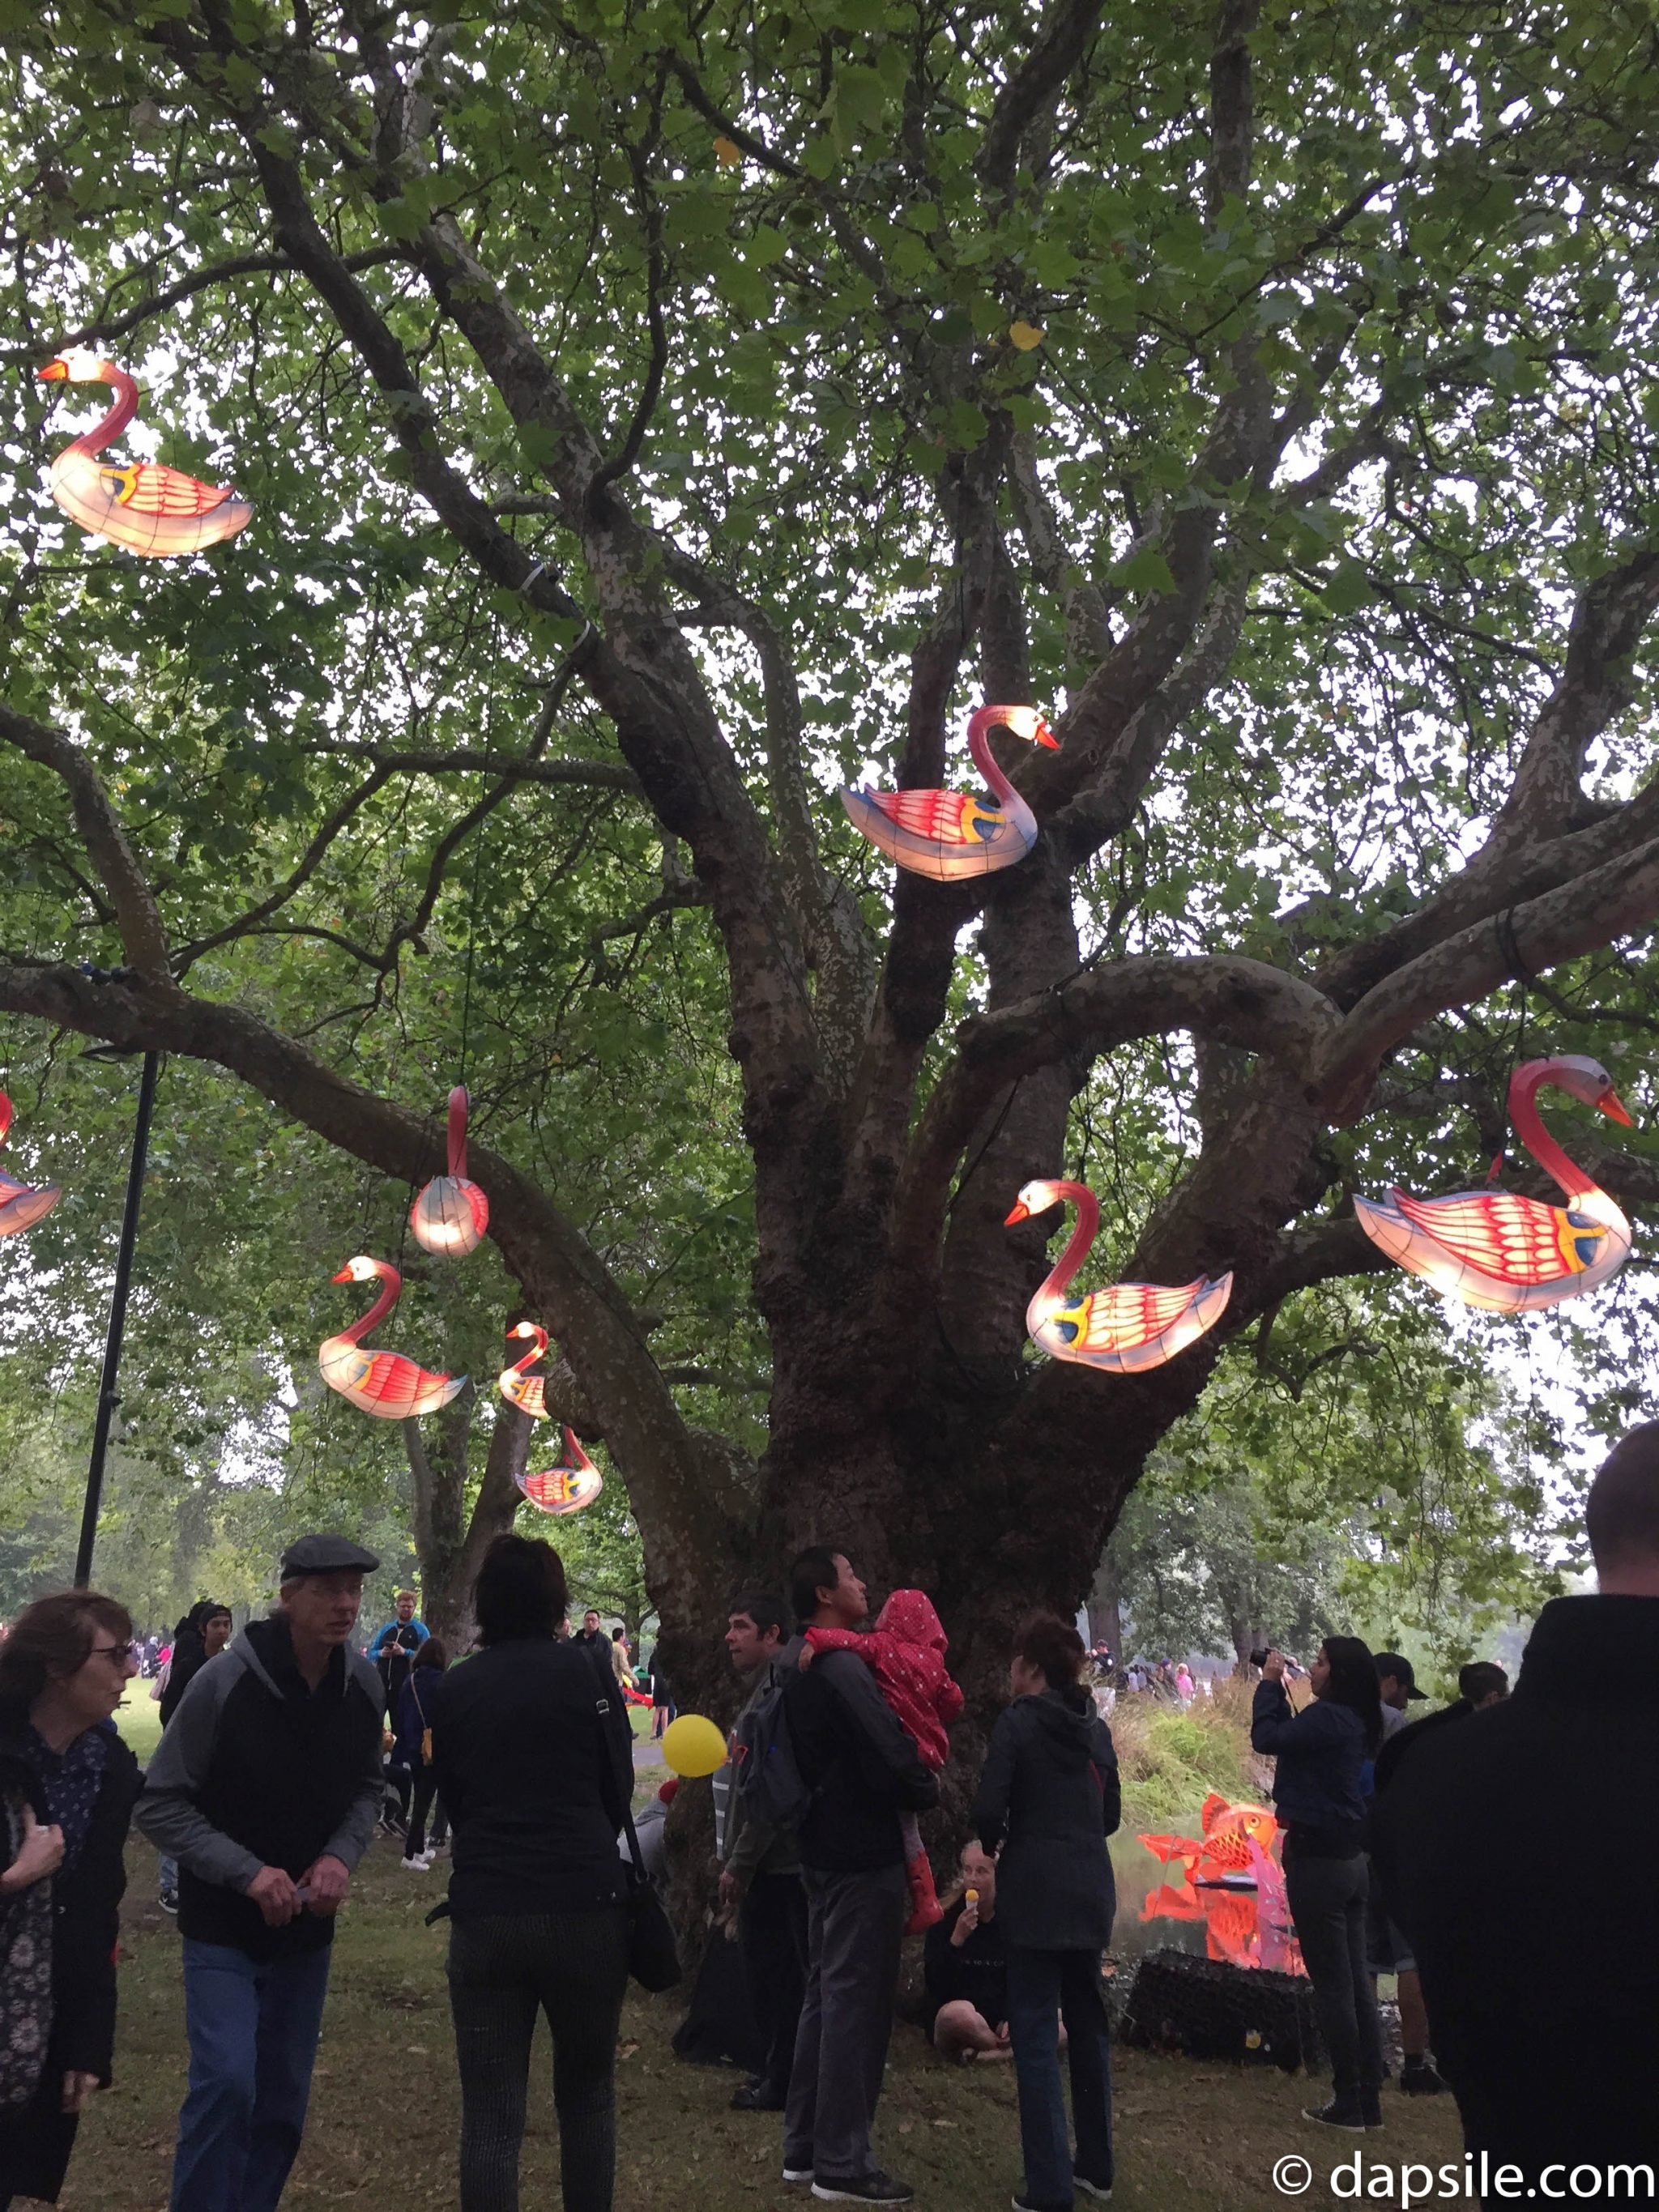 Swan Lanterns in a Tree at Christchurch Lantern Festival